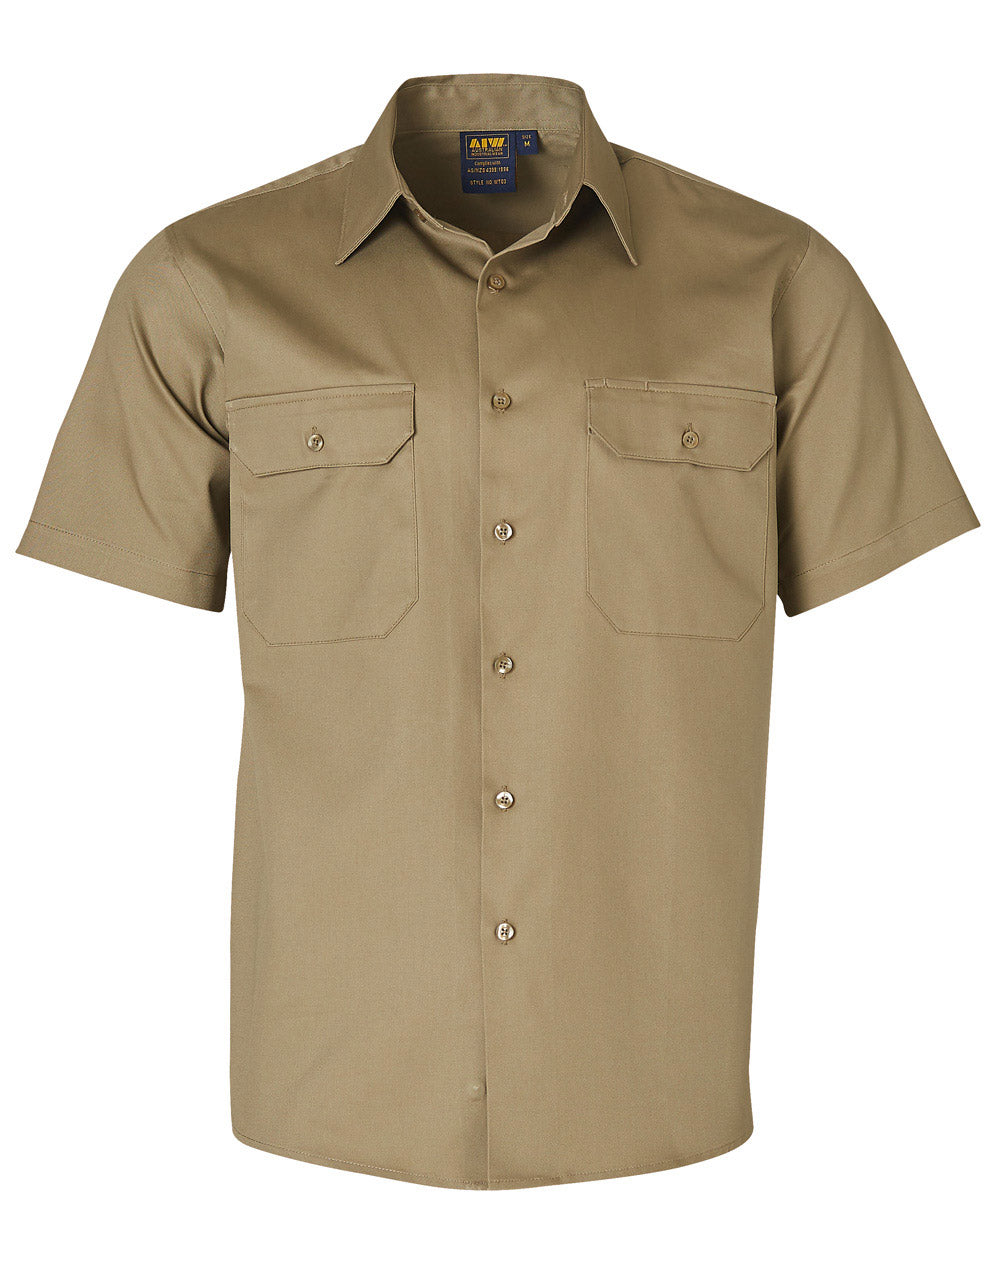 JCWT03 Cotton Drill Short Sleeve Work Shirt